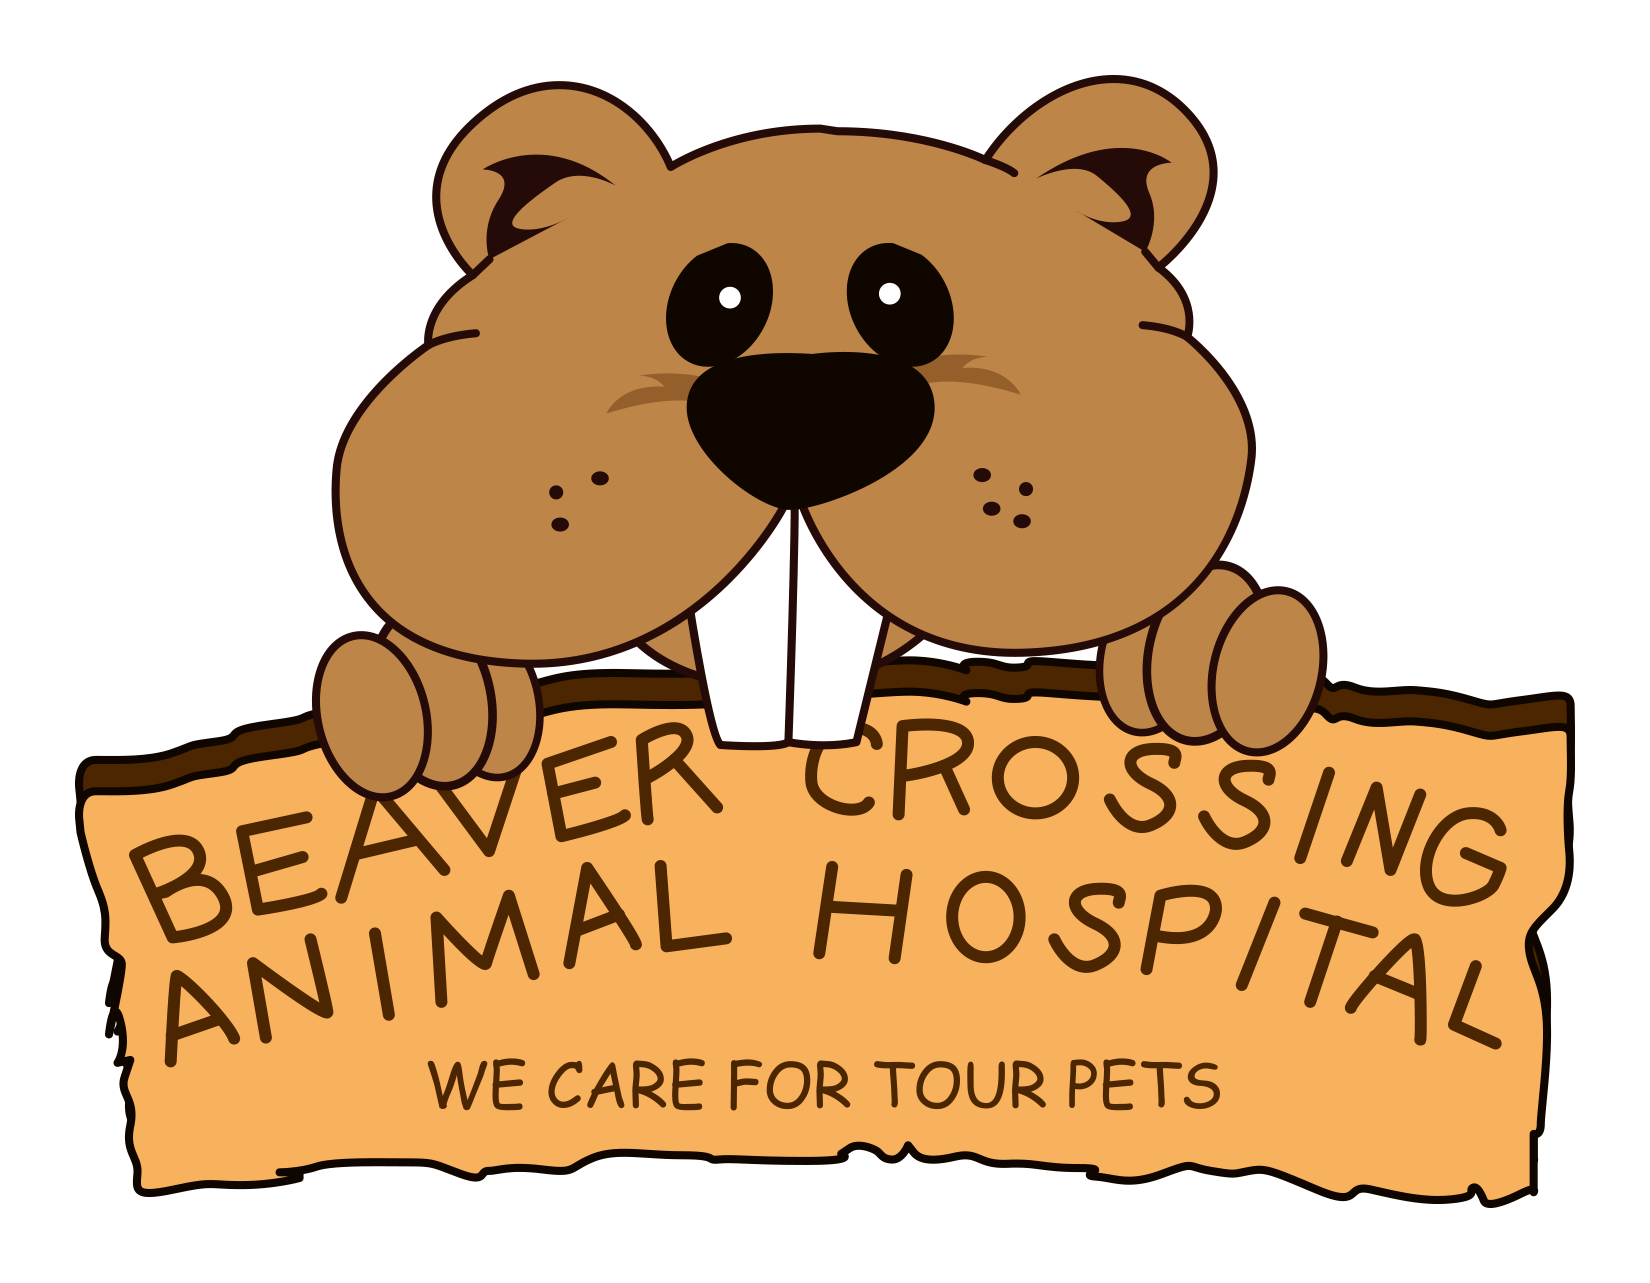 Beaver Crossing Animal Hospital